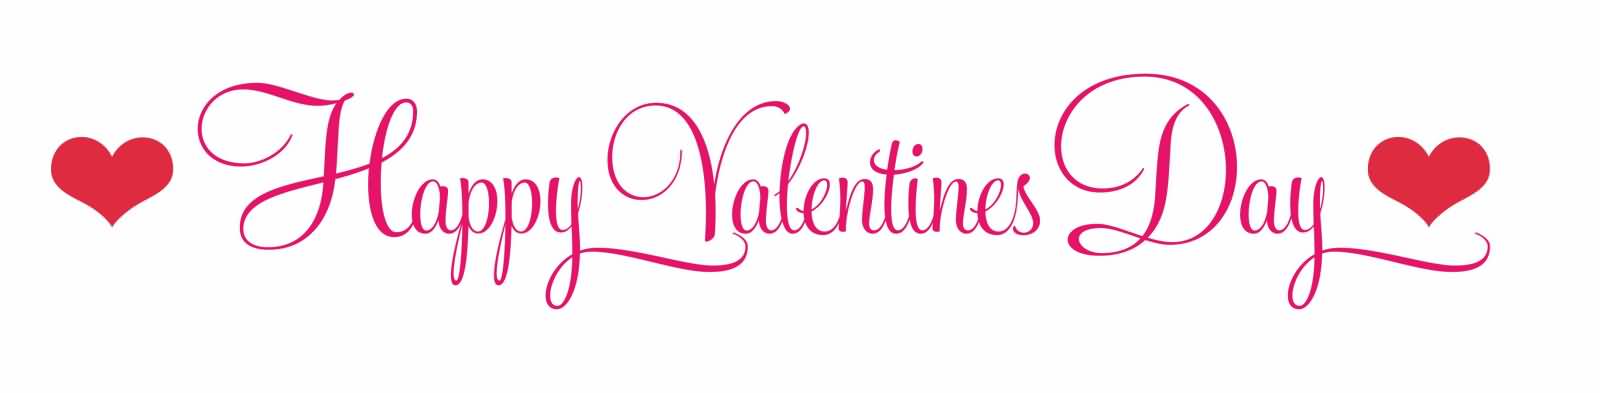 Happy Valentine’s Day Banner Image